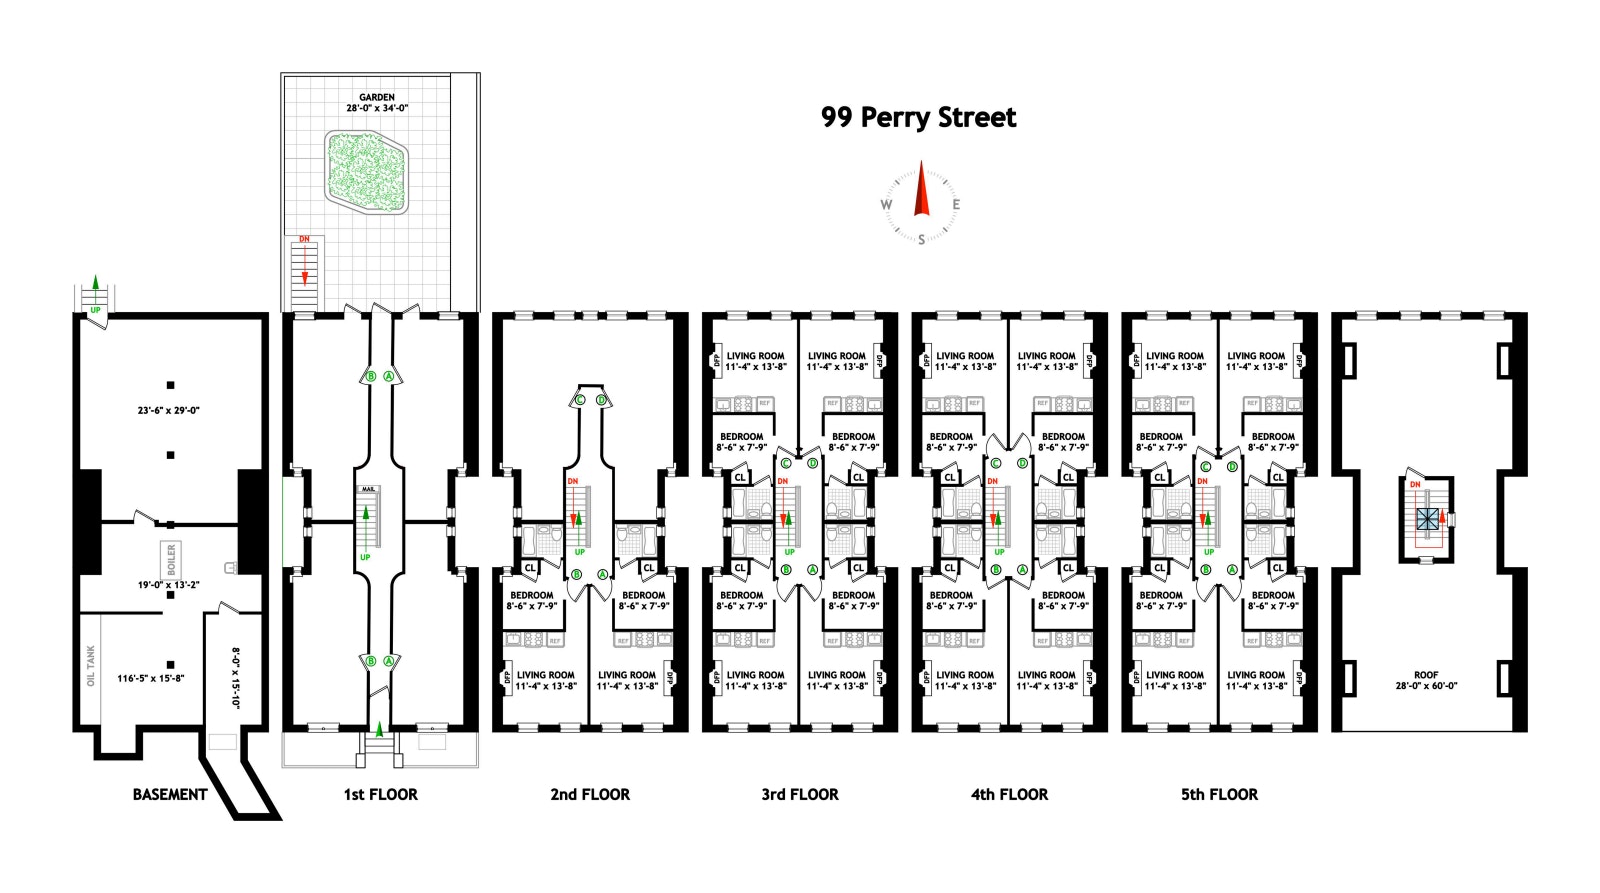 Floorplan for 99 Perry Street